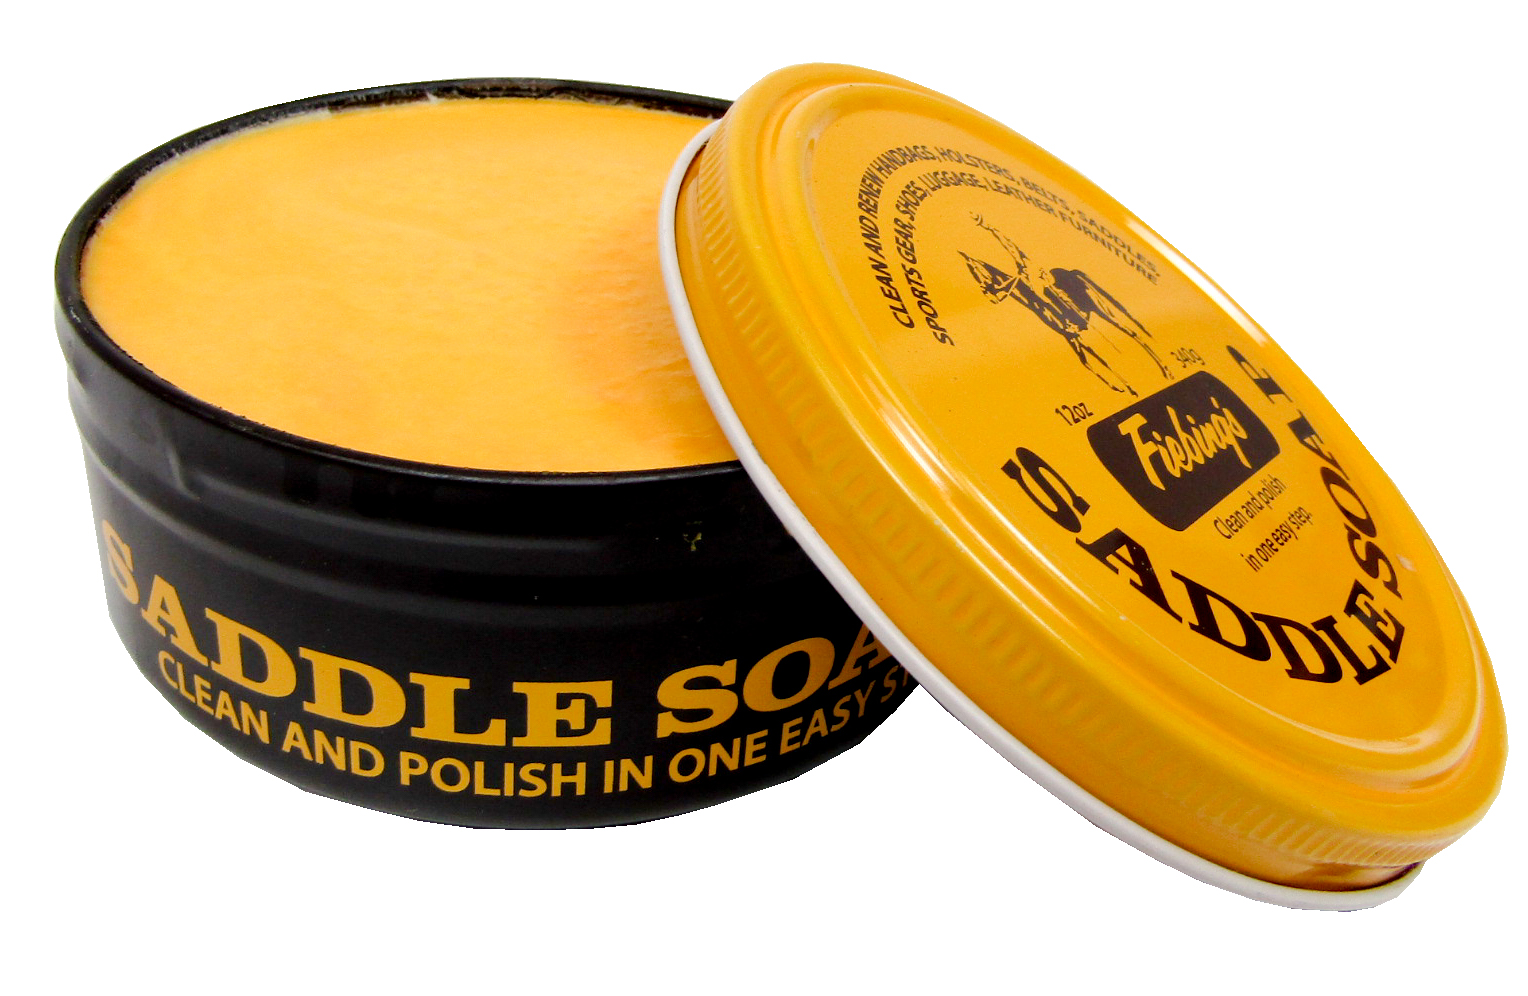 Kiwi Outdoor Saddle Soap, 3.125 oz – Vitabox